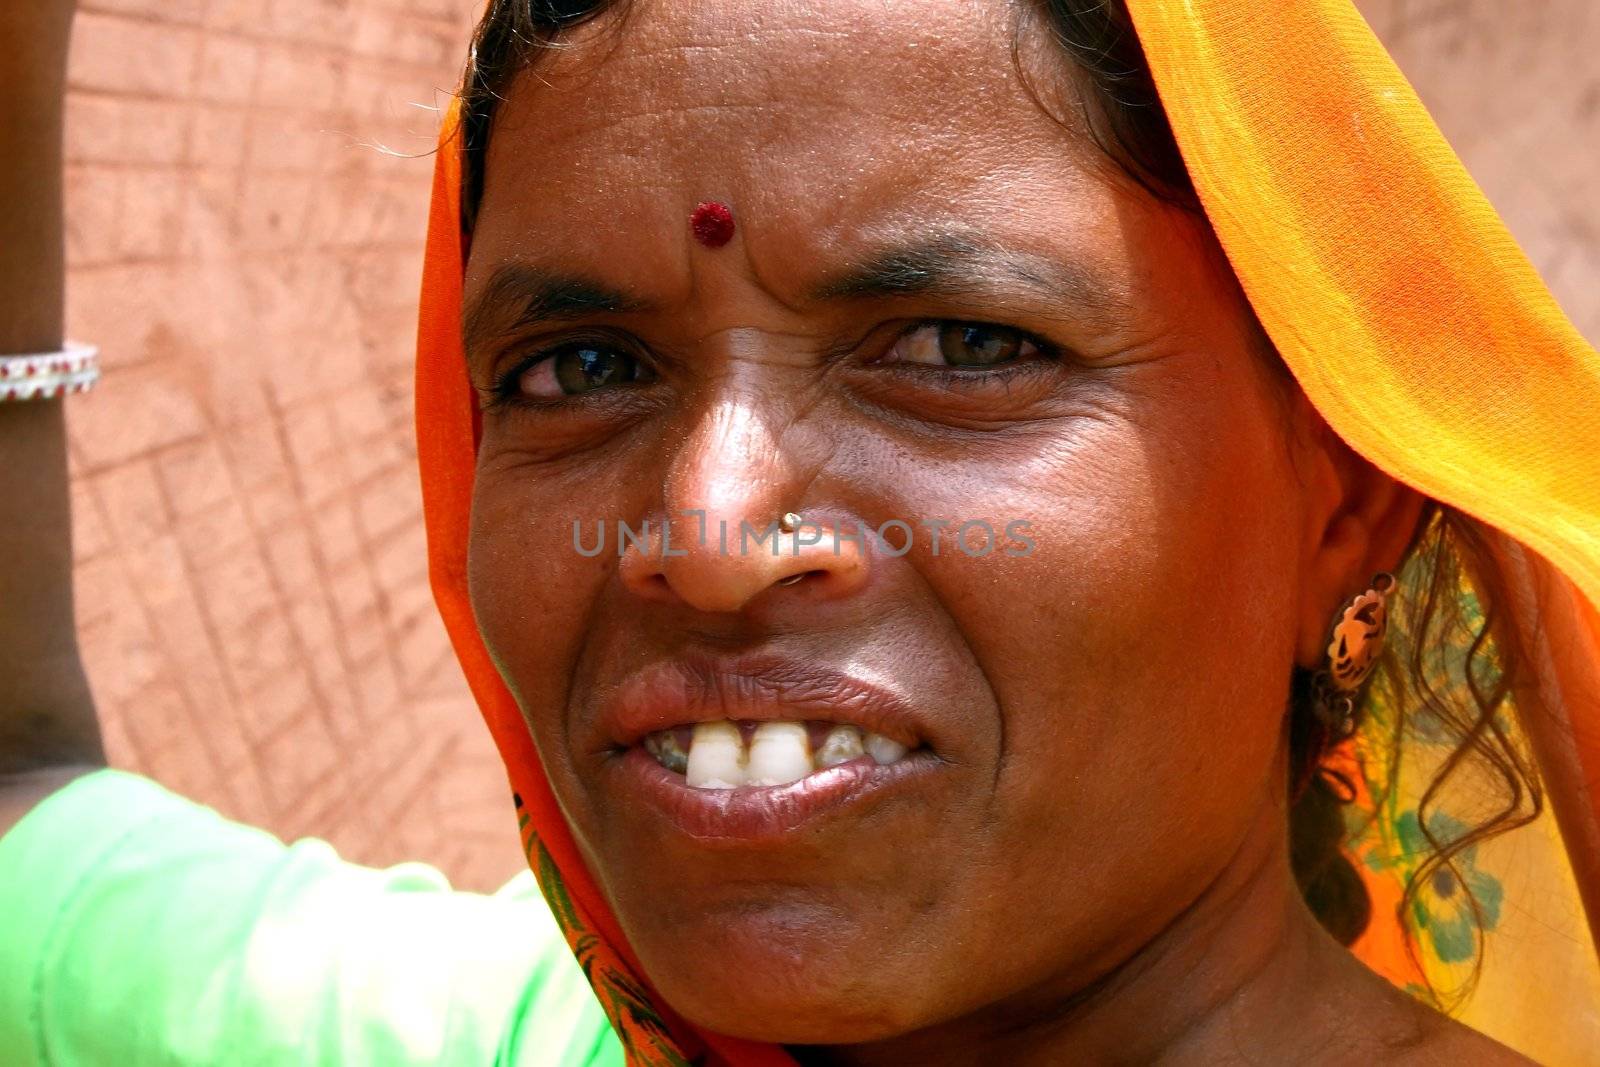 Hindu woman wearing traditional sari